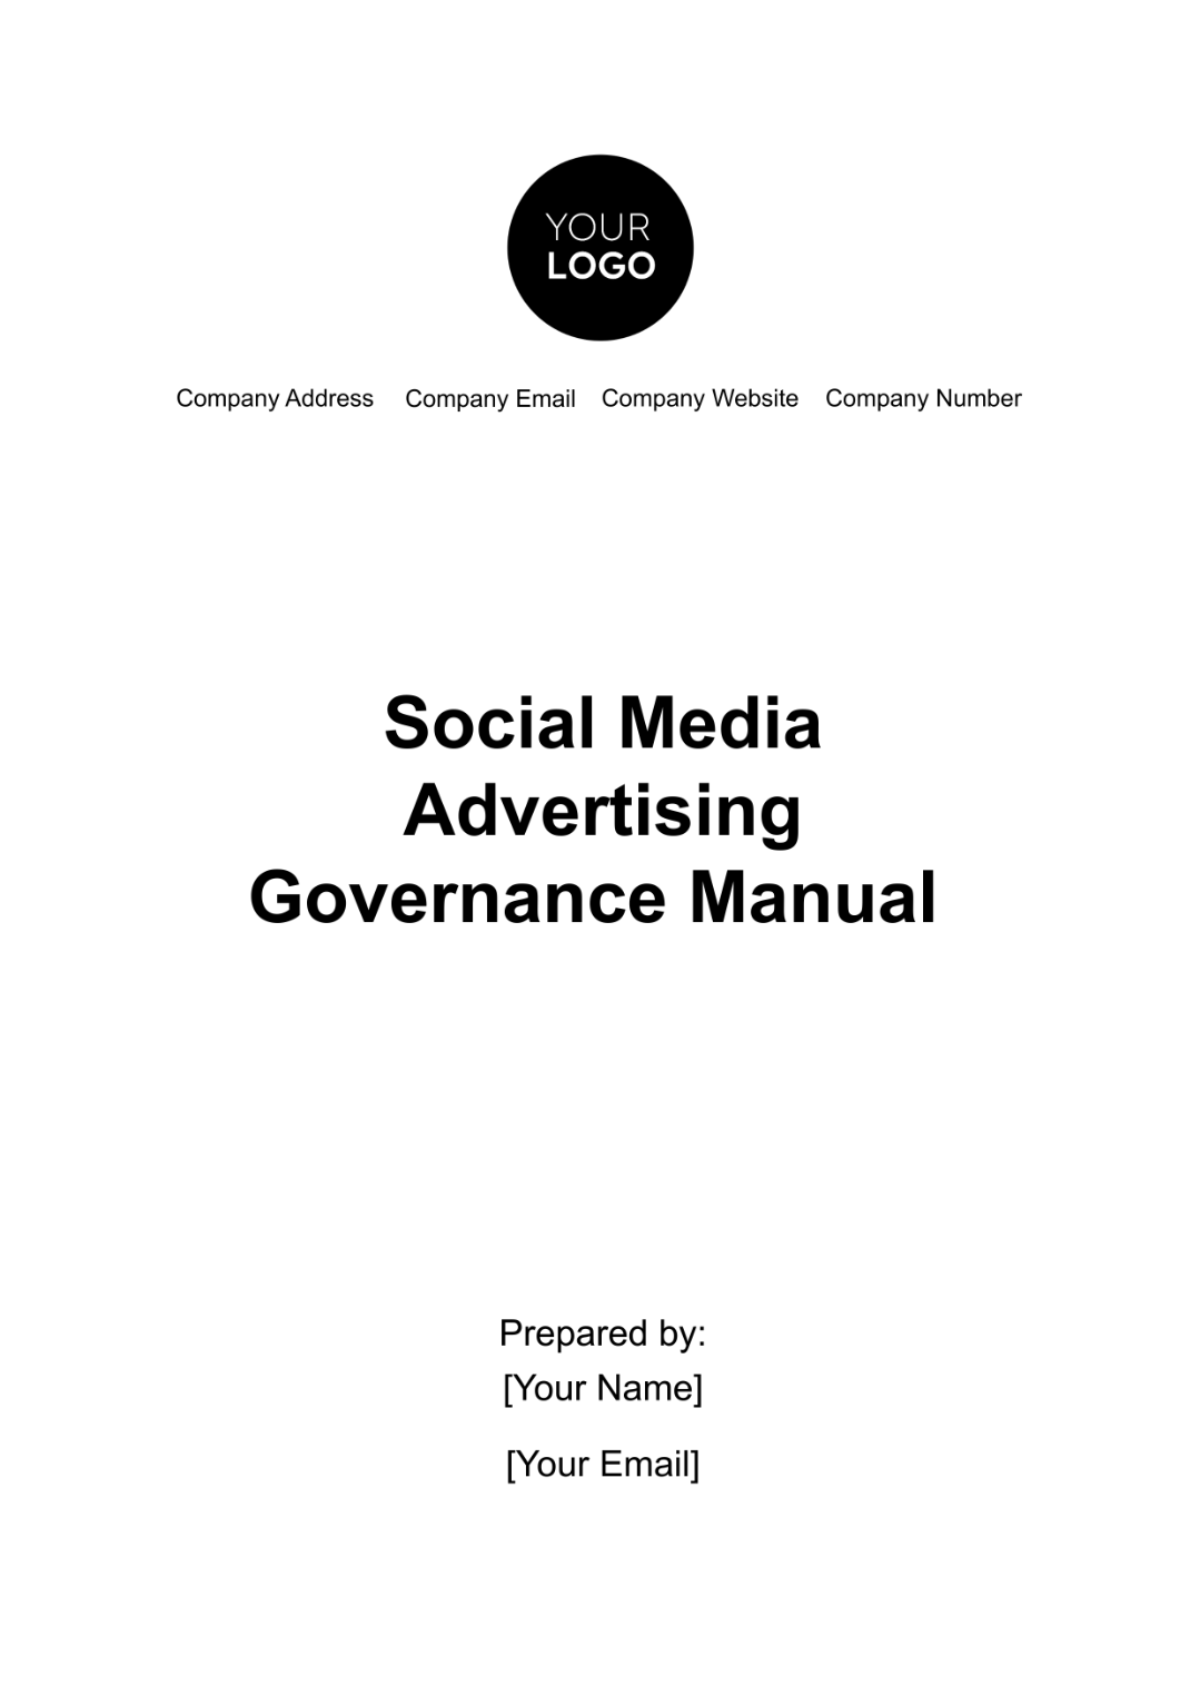 Social Media Advertising Governance Manual Template